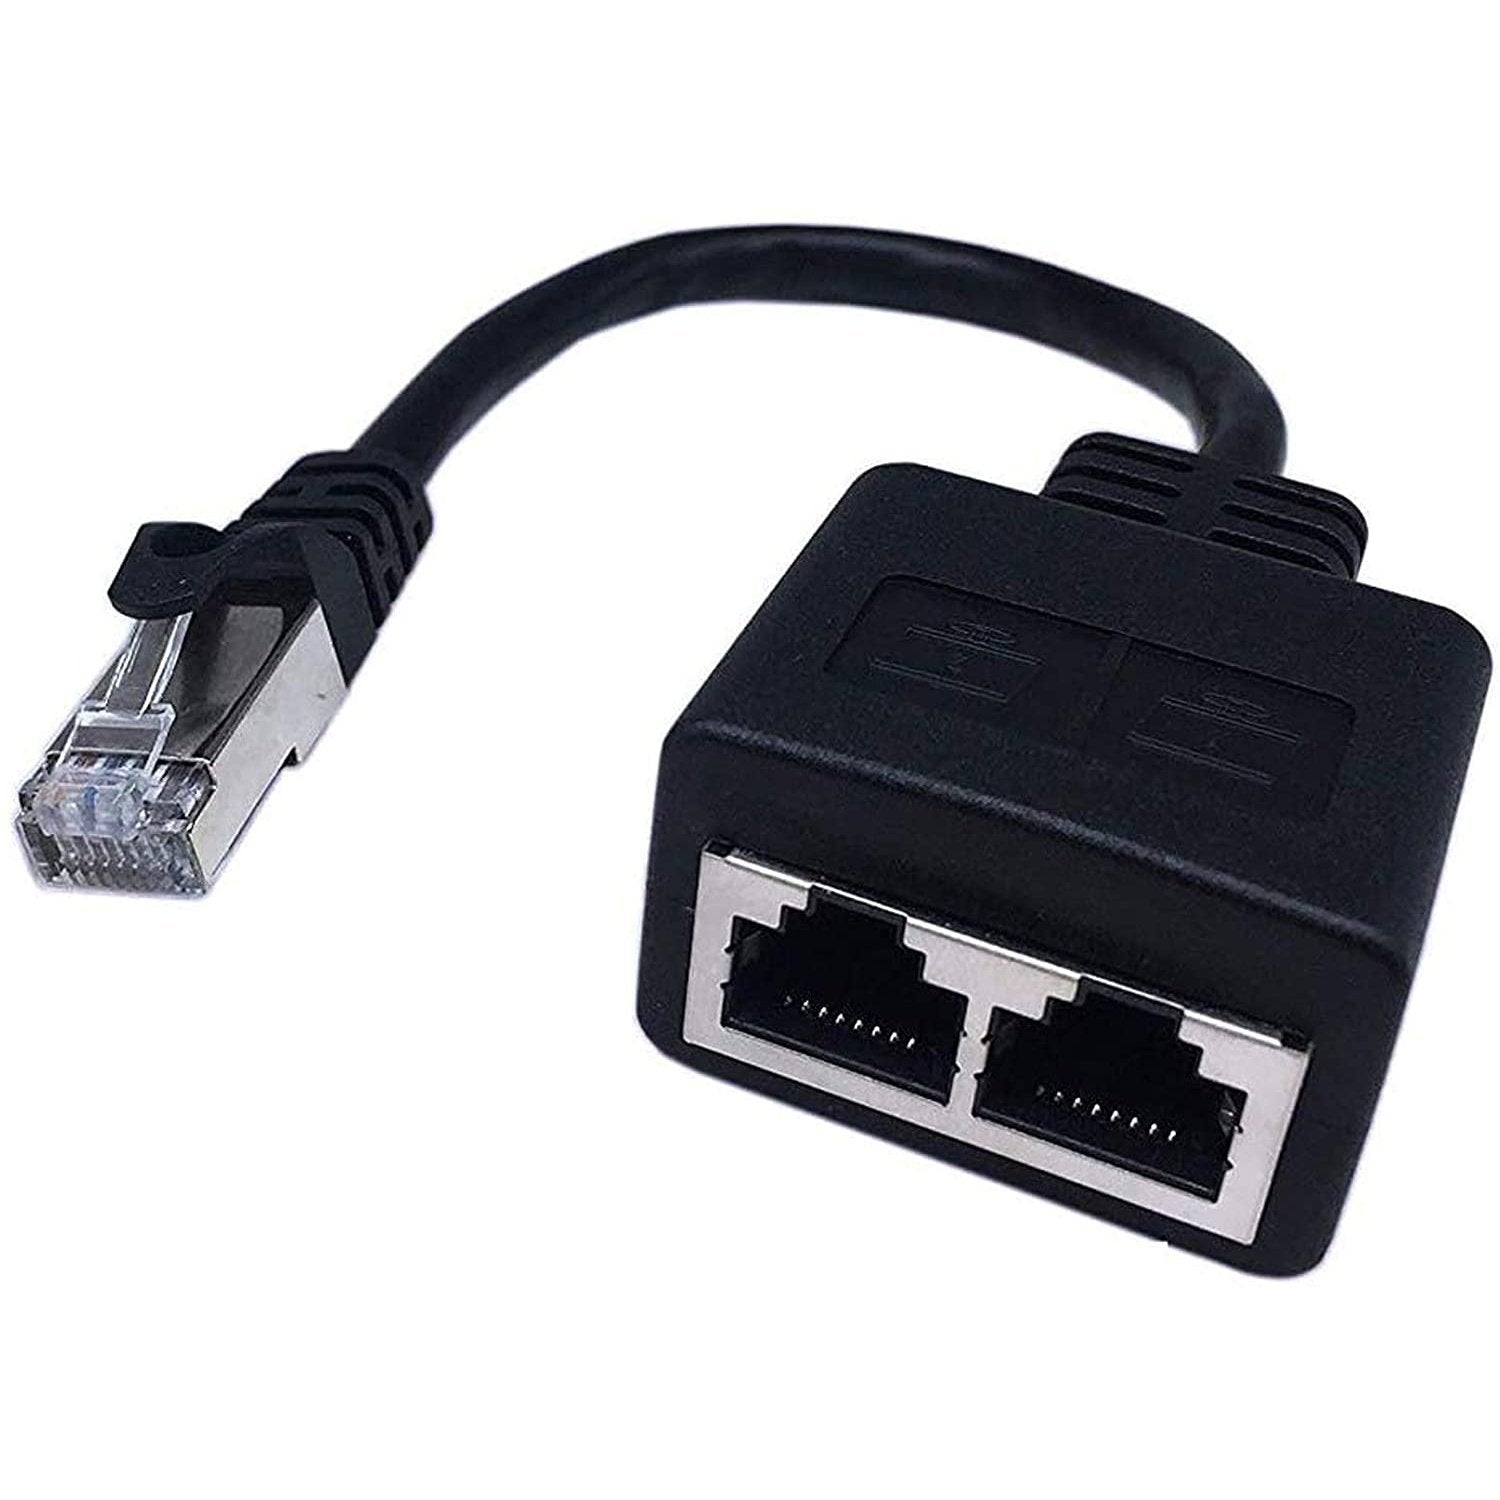 Lan Ethernet Network Splitter Adapter(1 Piece, Black)